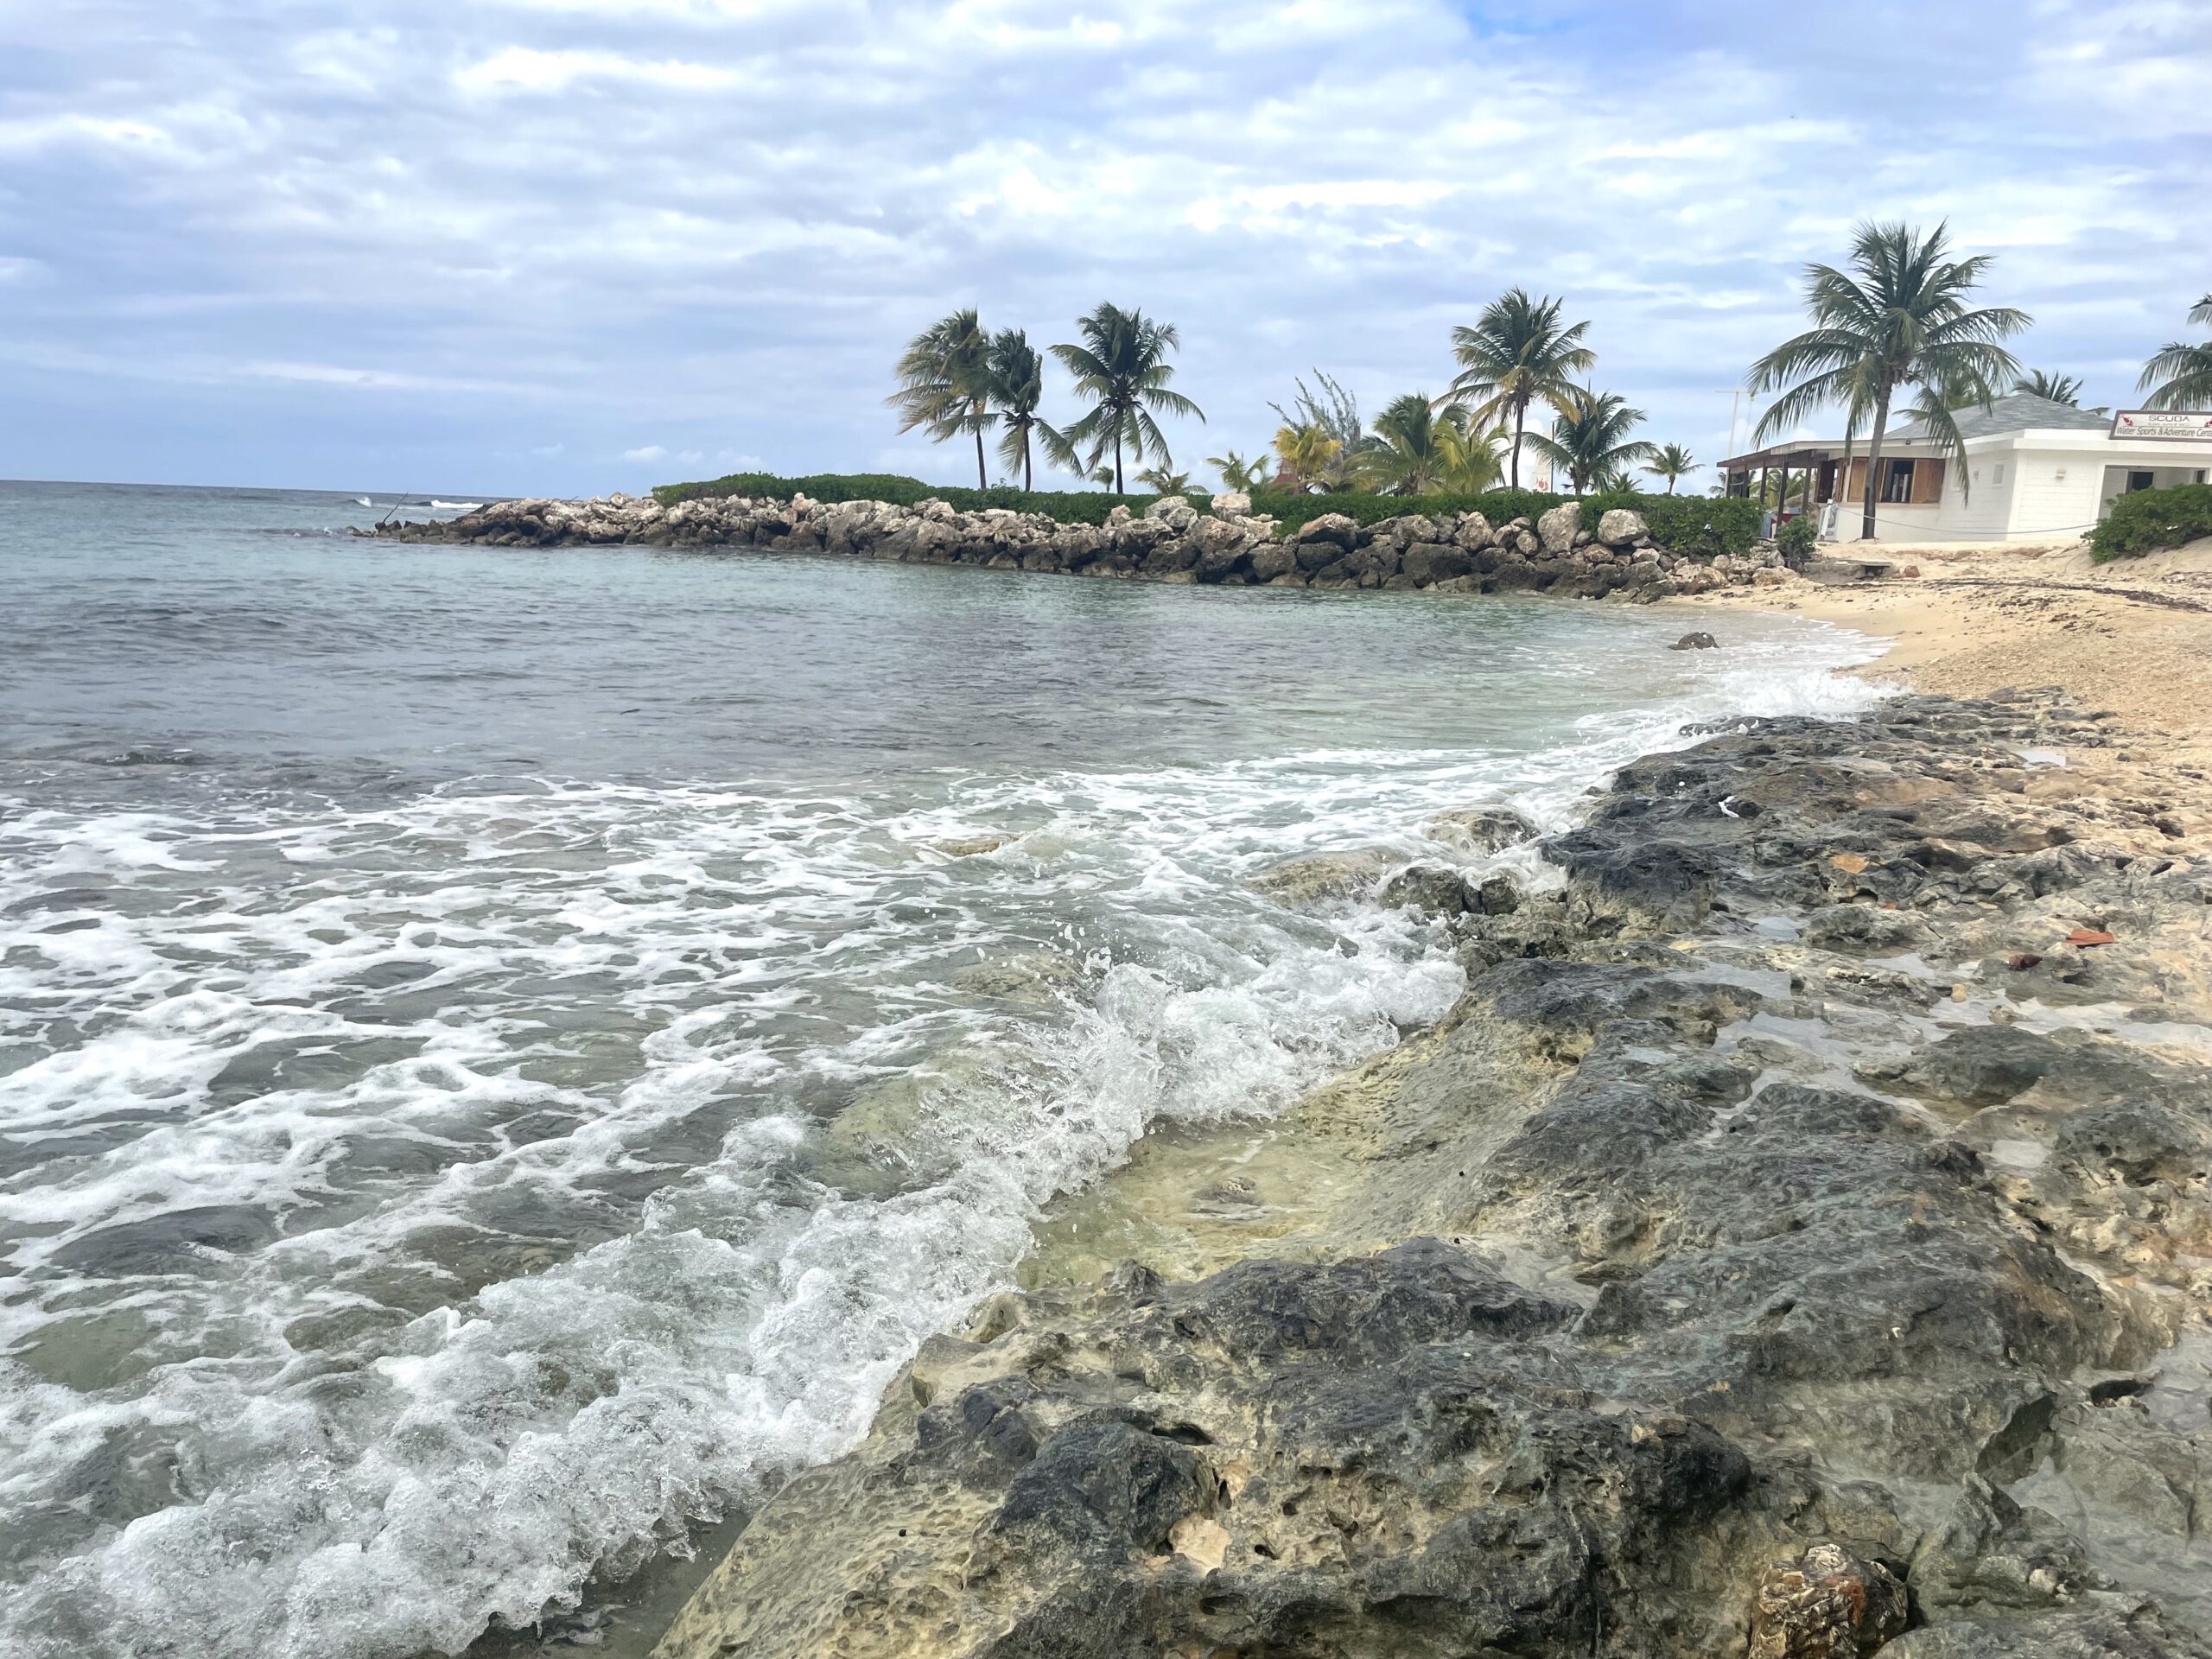 Beach scene with waves, rocks and palm trees along the shoreline at Bahia Grand Principe Resort in Runaway Bay, Jamaica